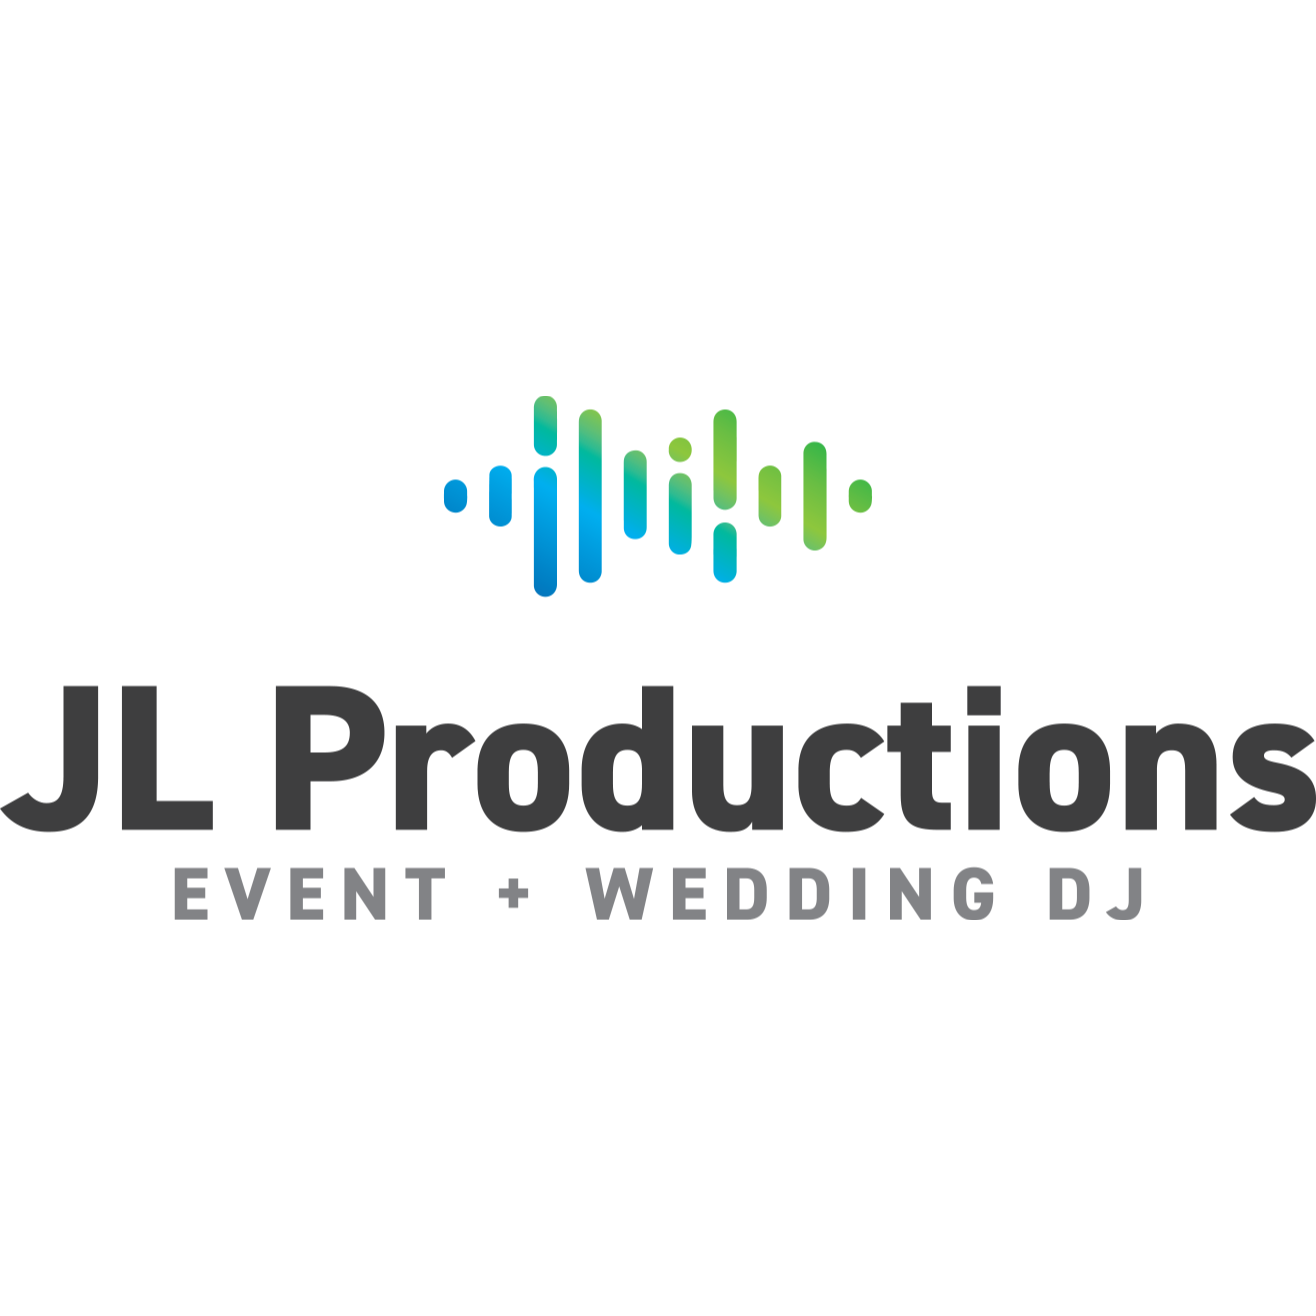 JL Productions - Event + Wedding DJ